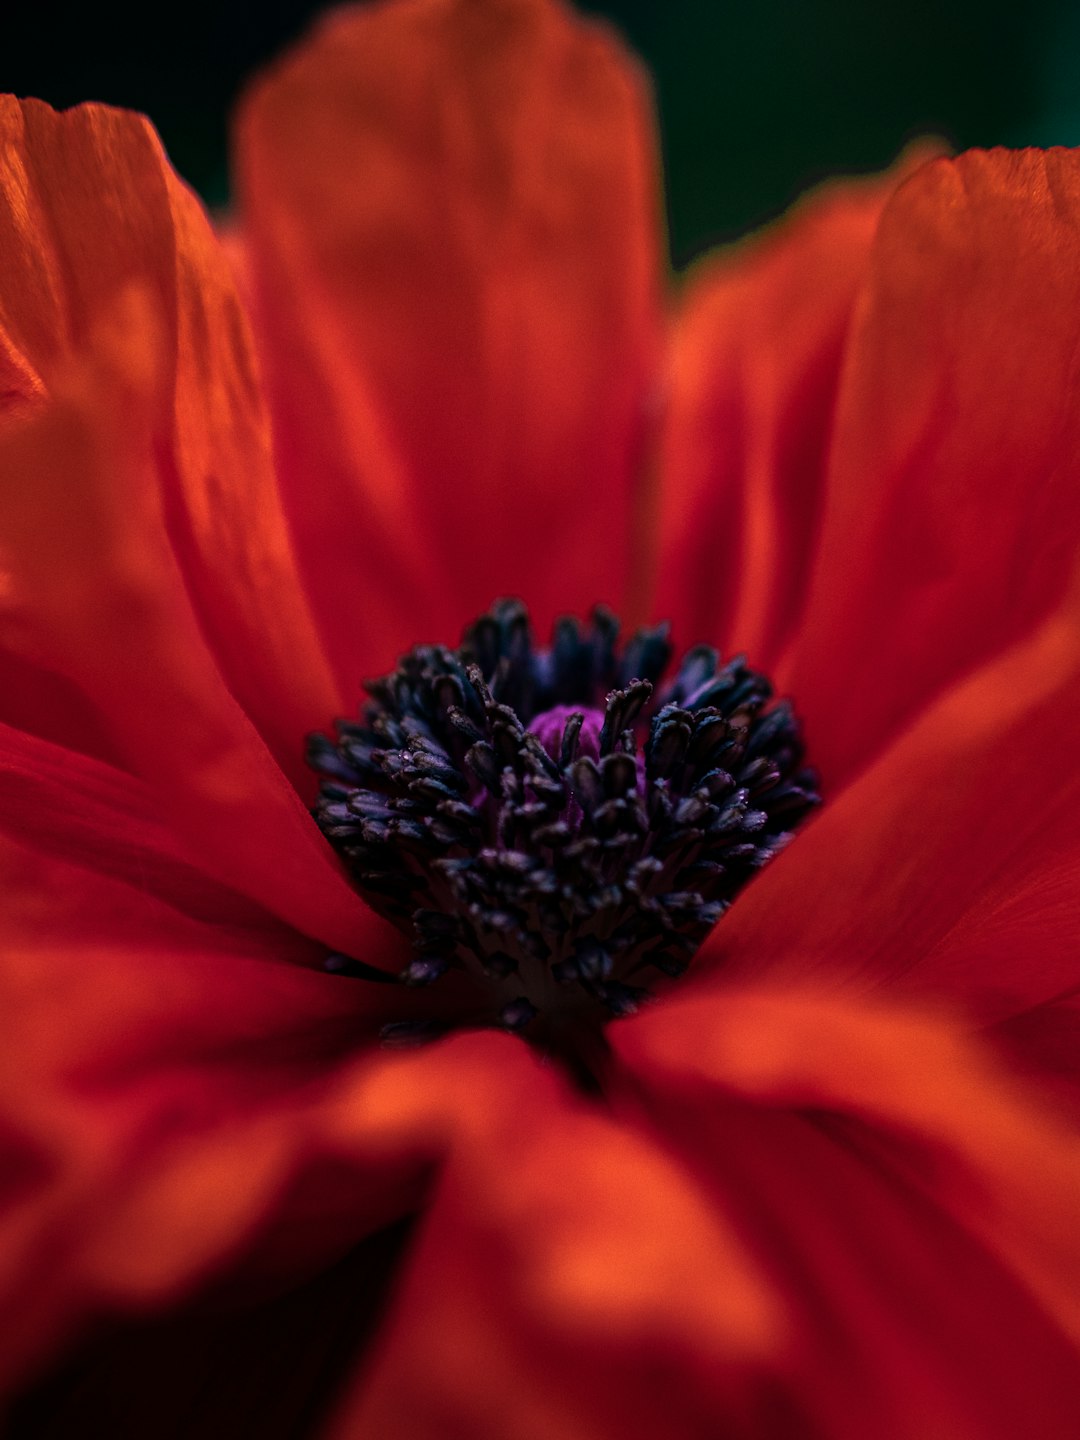 orange-petaled flower